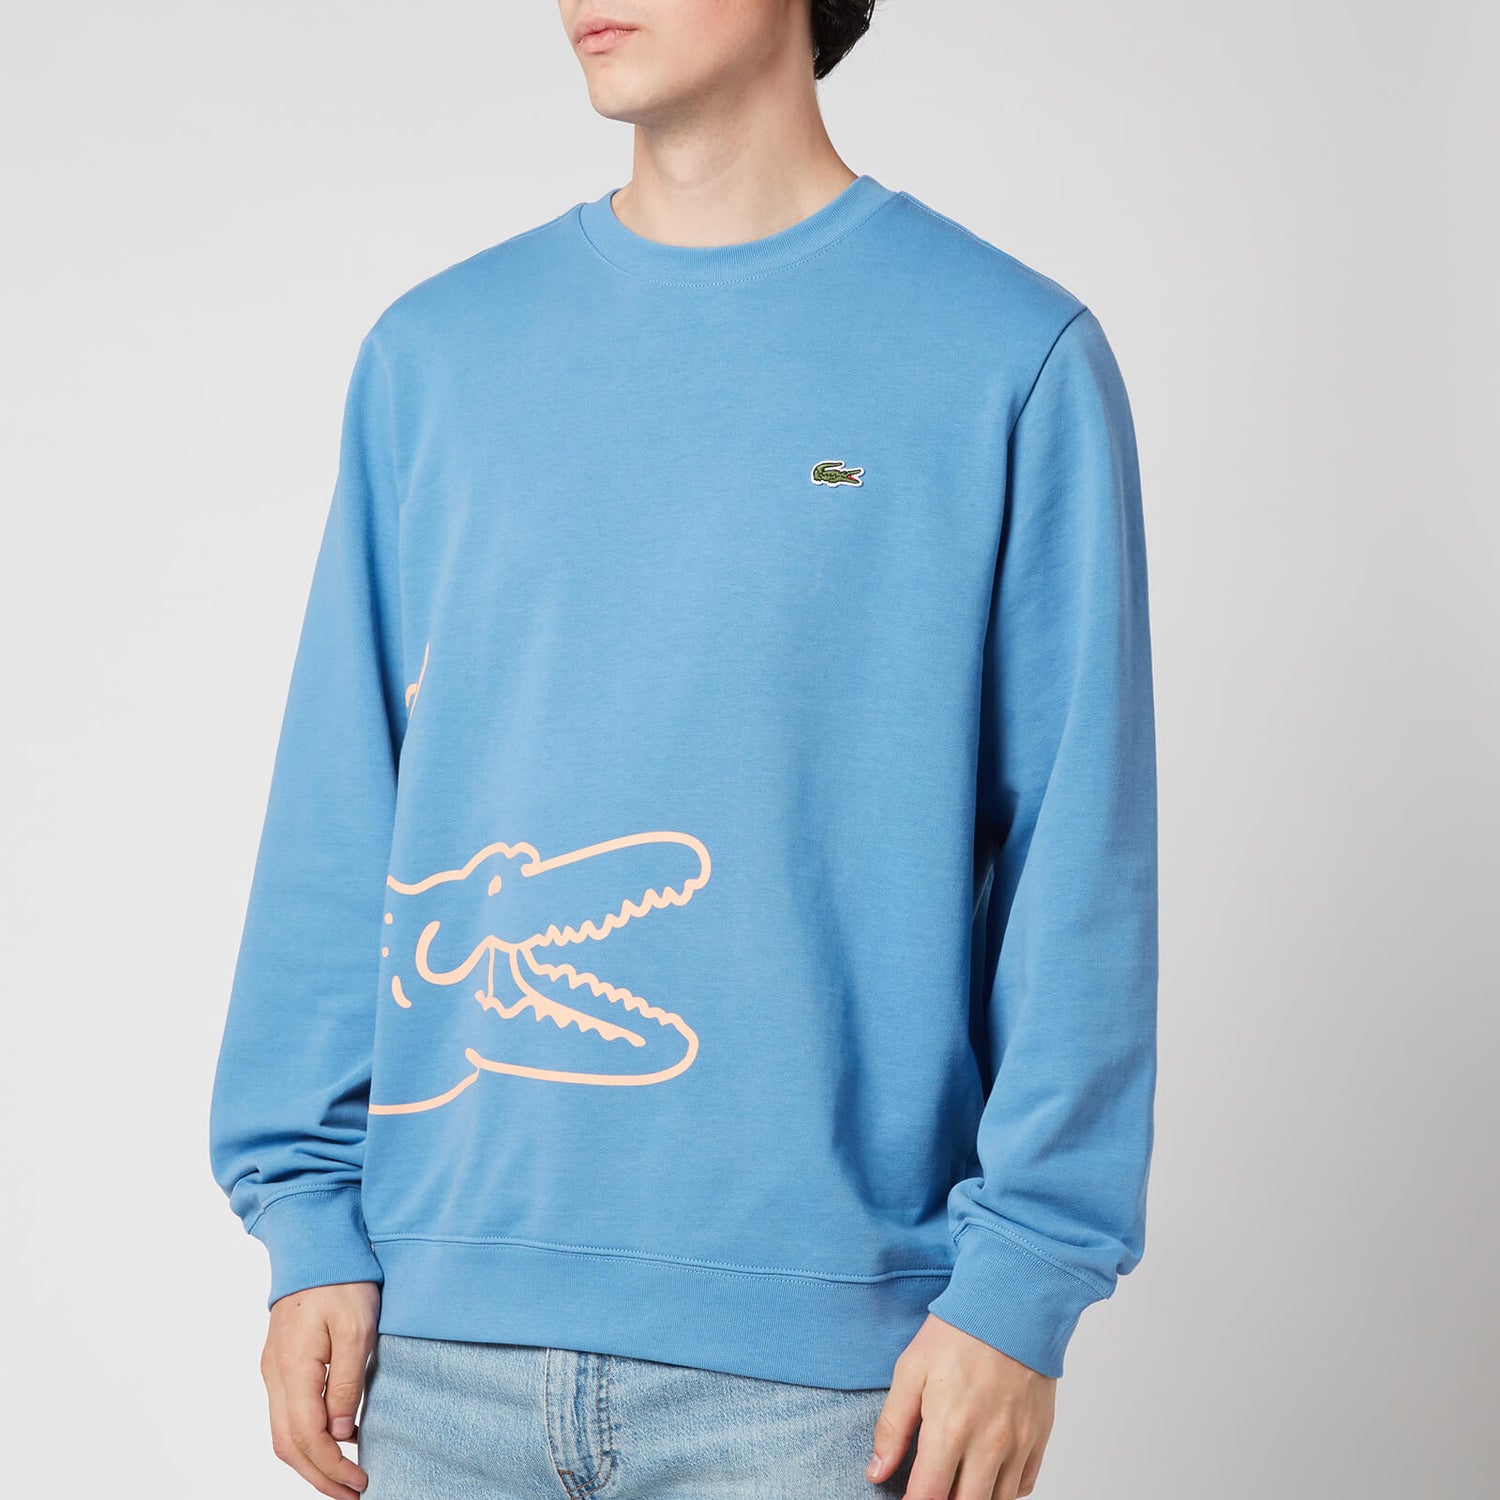 Lacoste Men's Wrap Around Crocodile Logo Sweatshirt - Turquin Blue